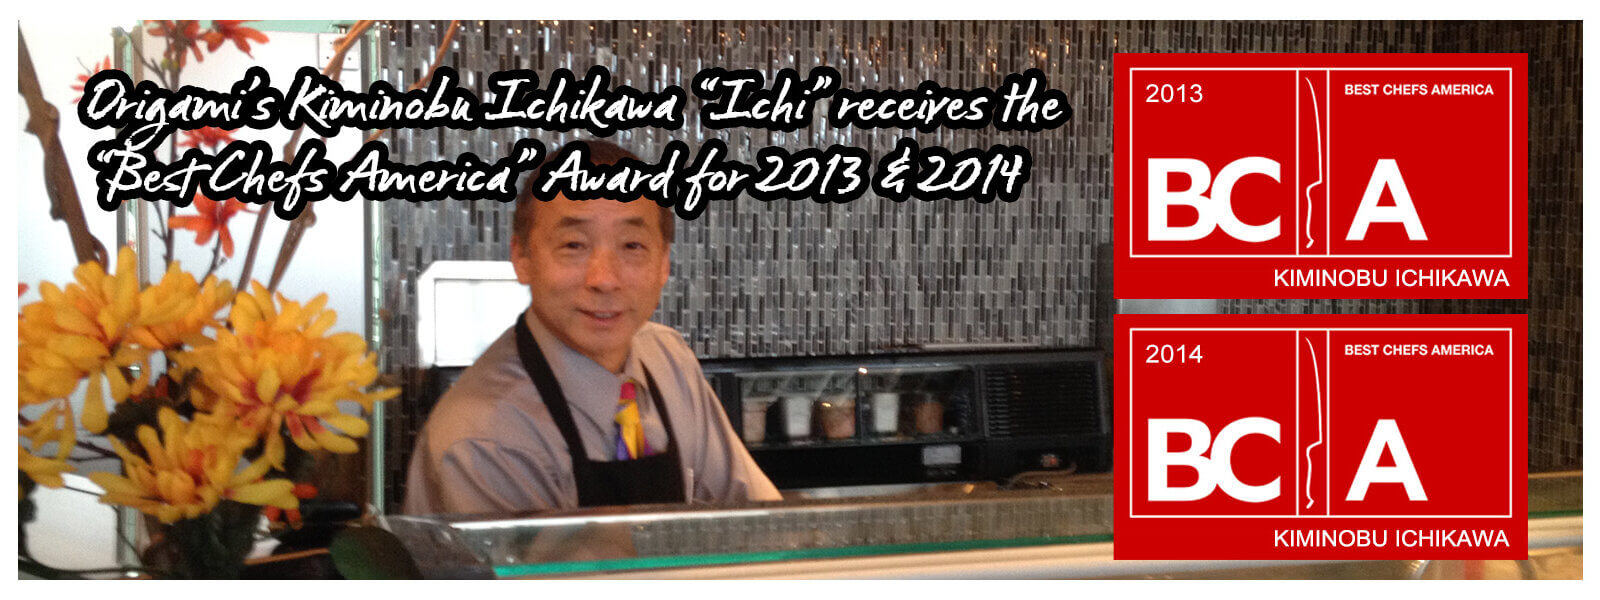 Origami's Ichi Wins Best Chefs awards